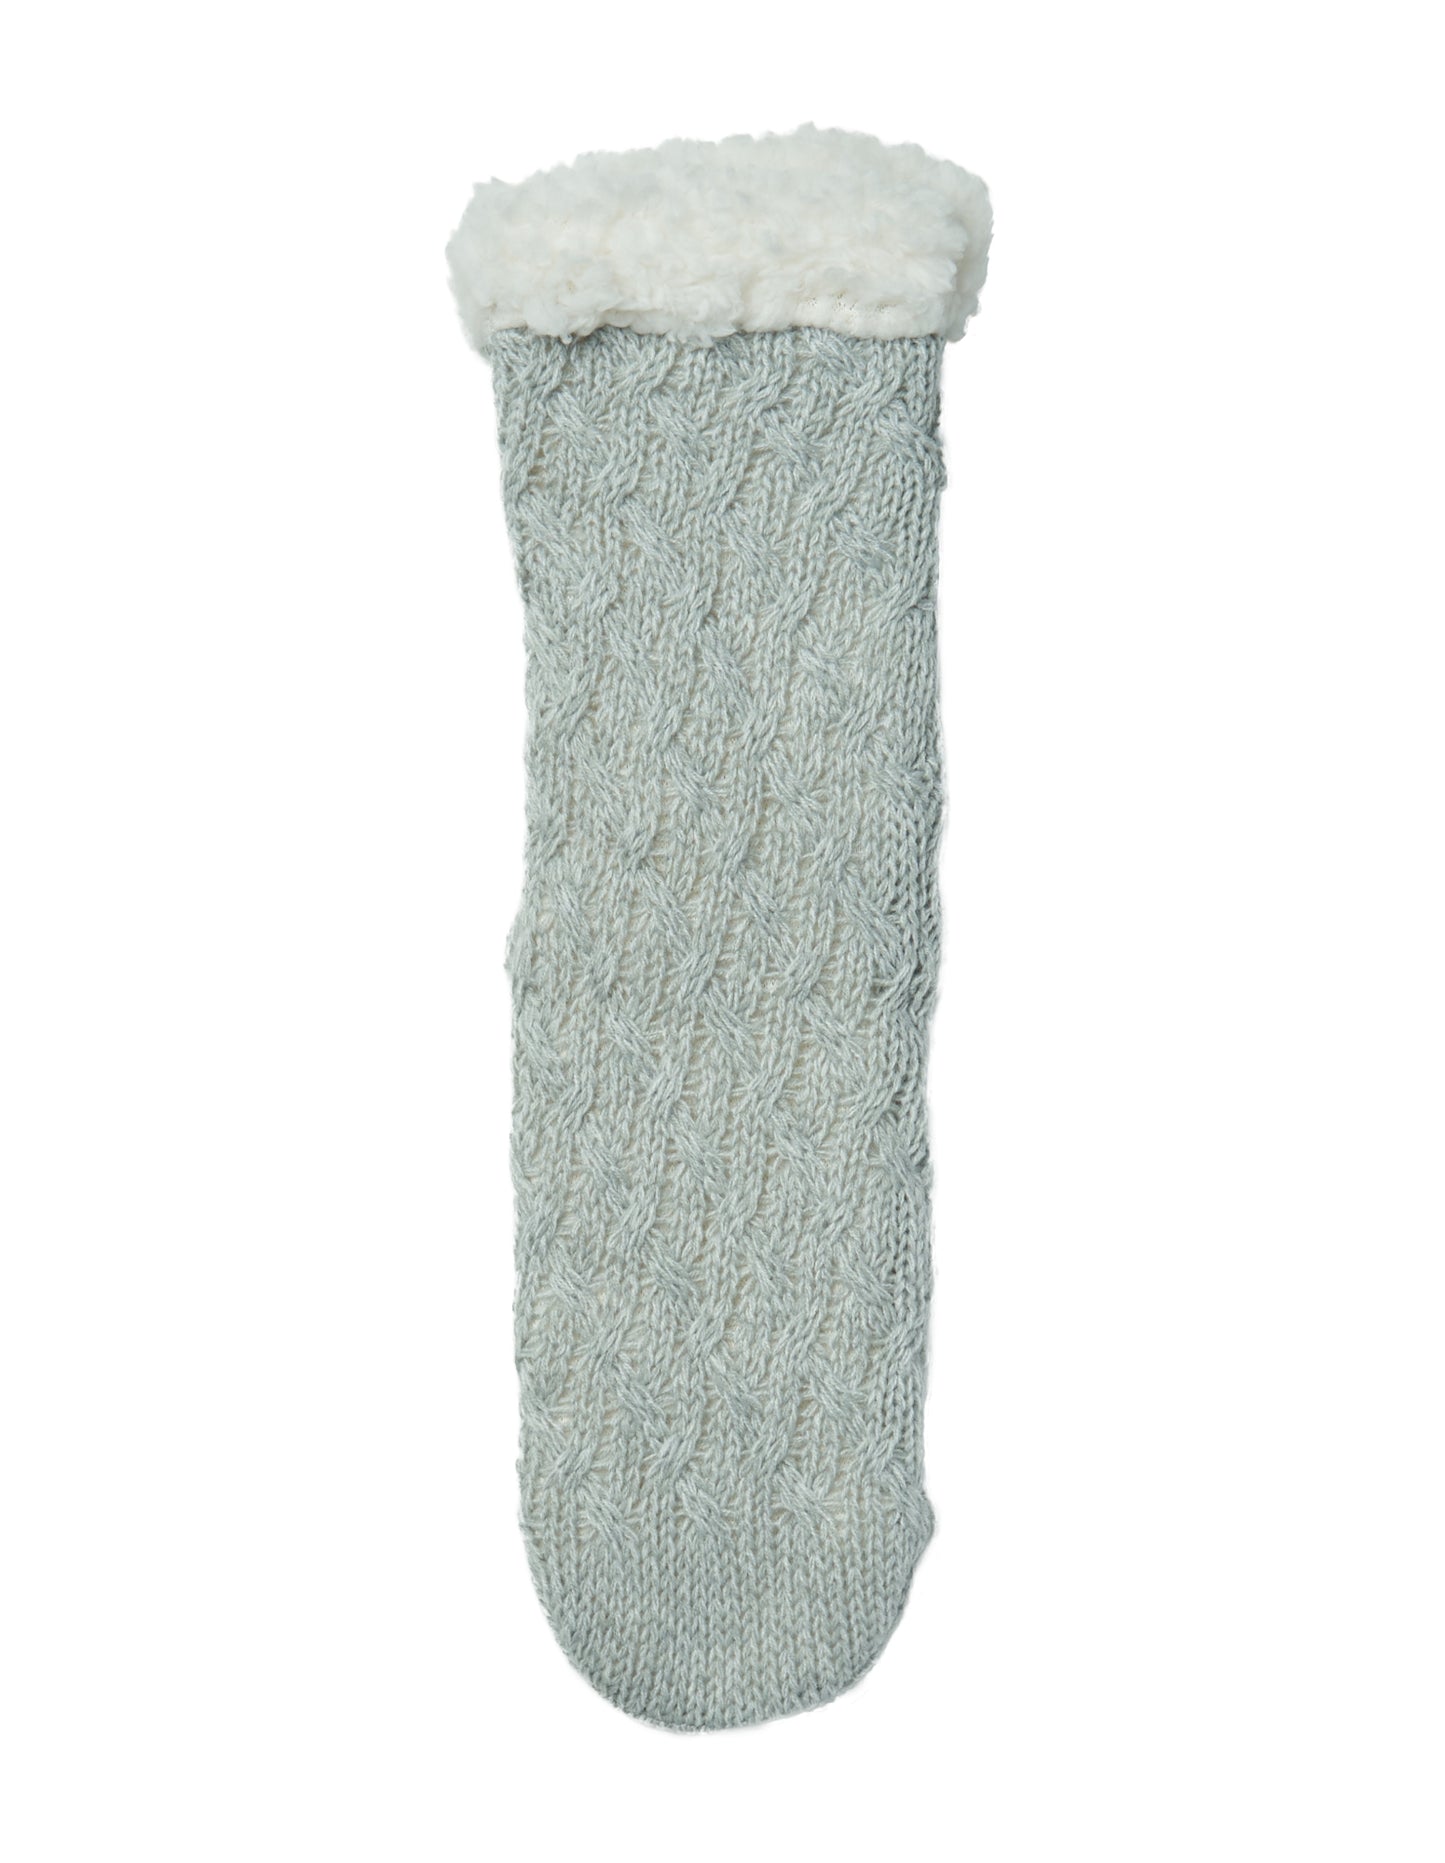 Top of Simon de Winter Women's Sherpa Lined Cable Home Socks in Cloud Grey